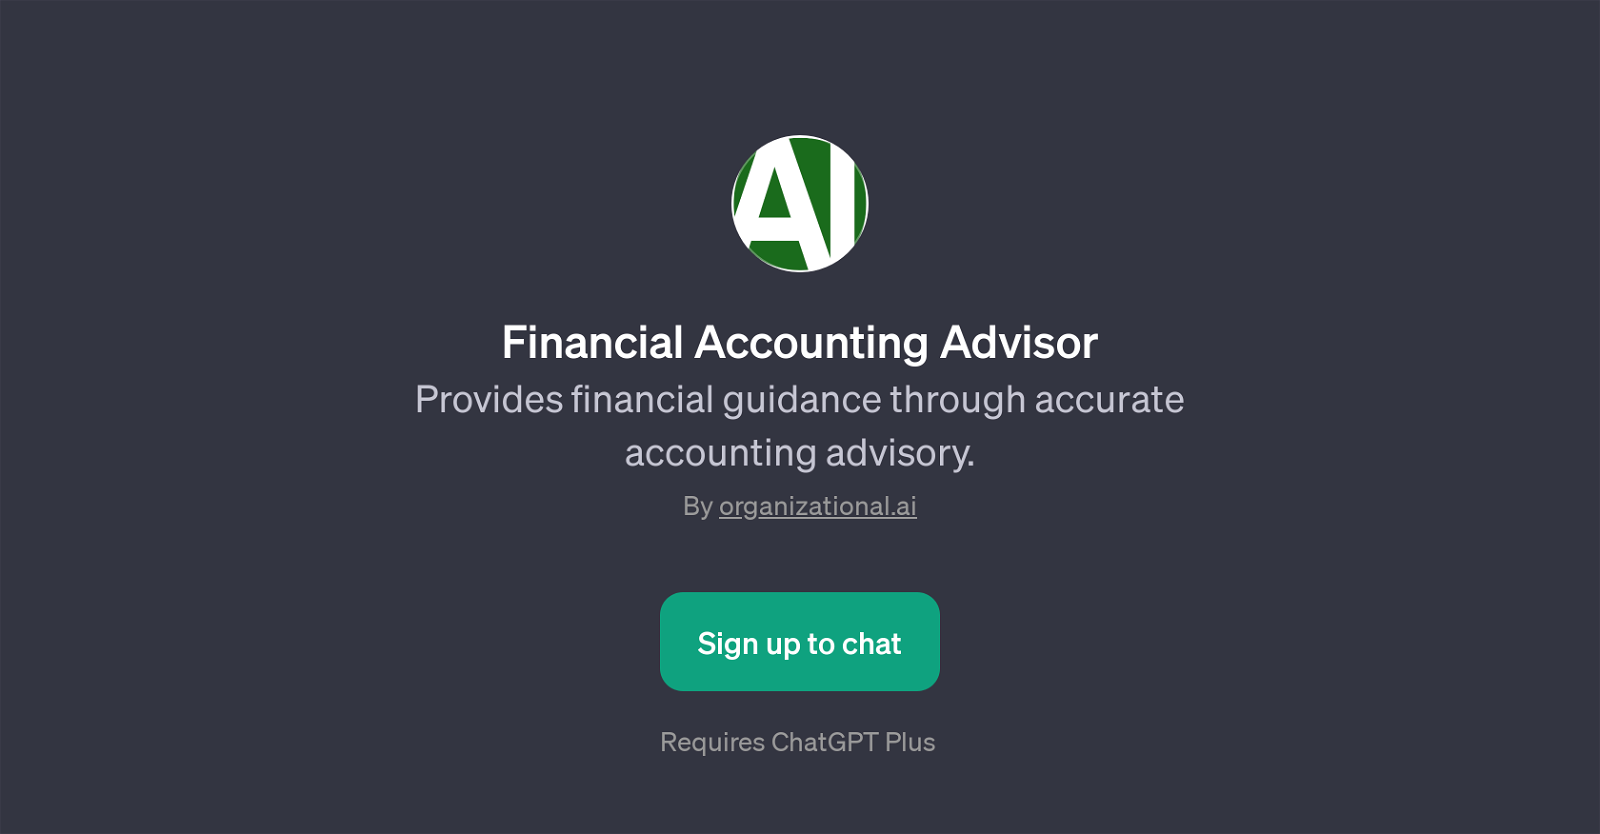 Financial Accounting Advisor website